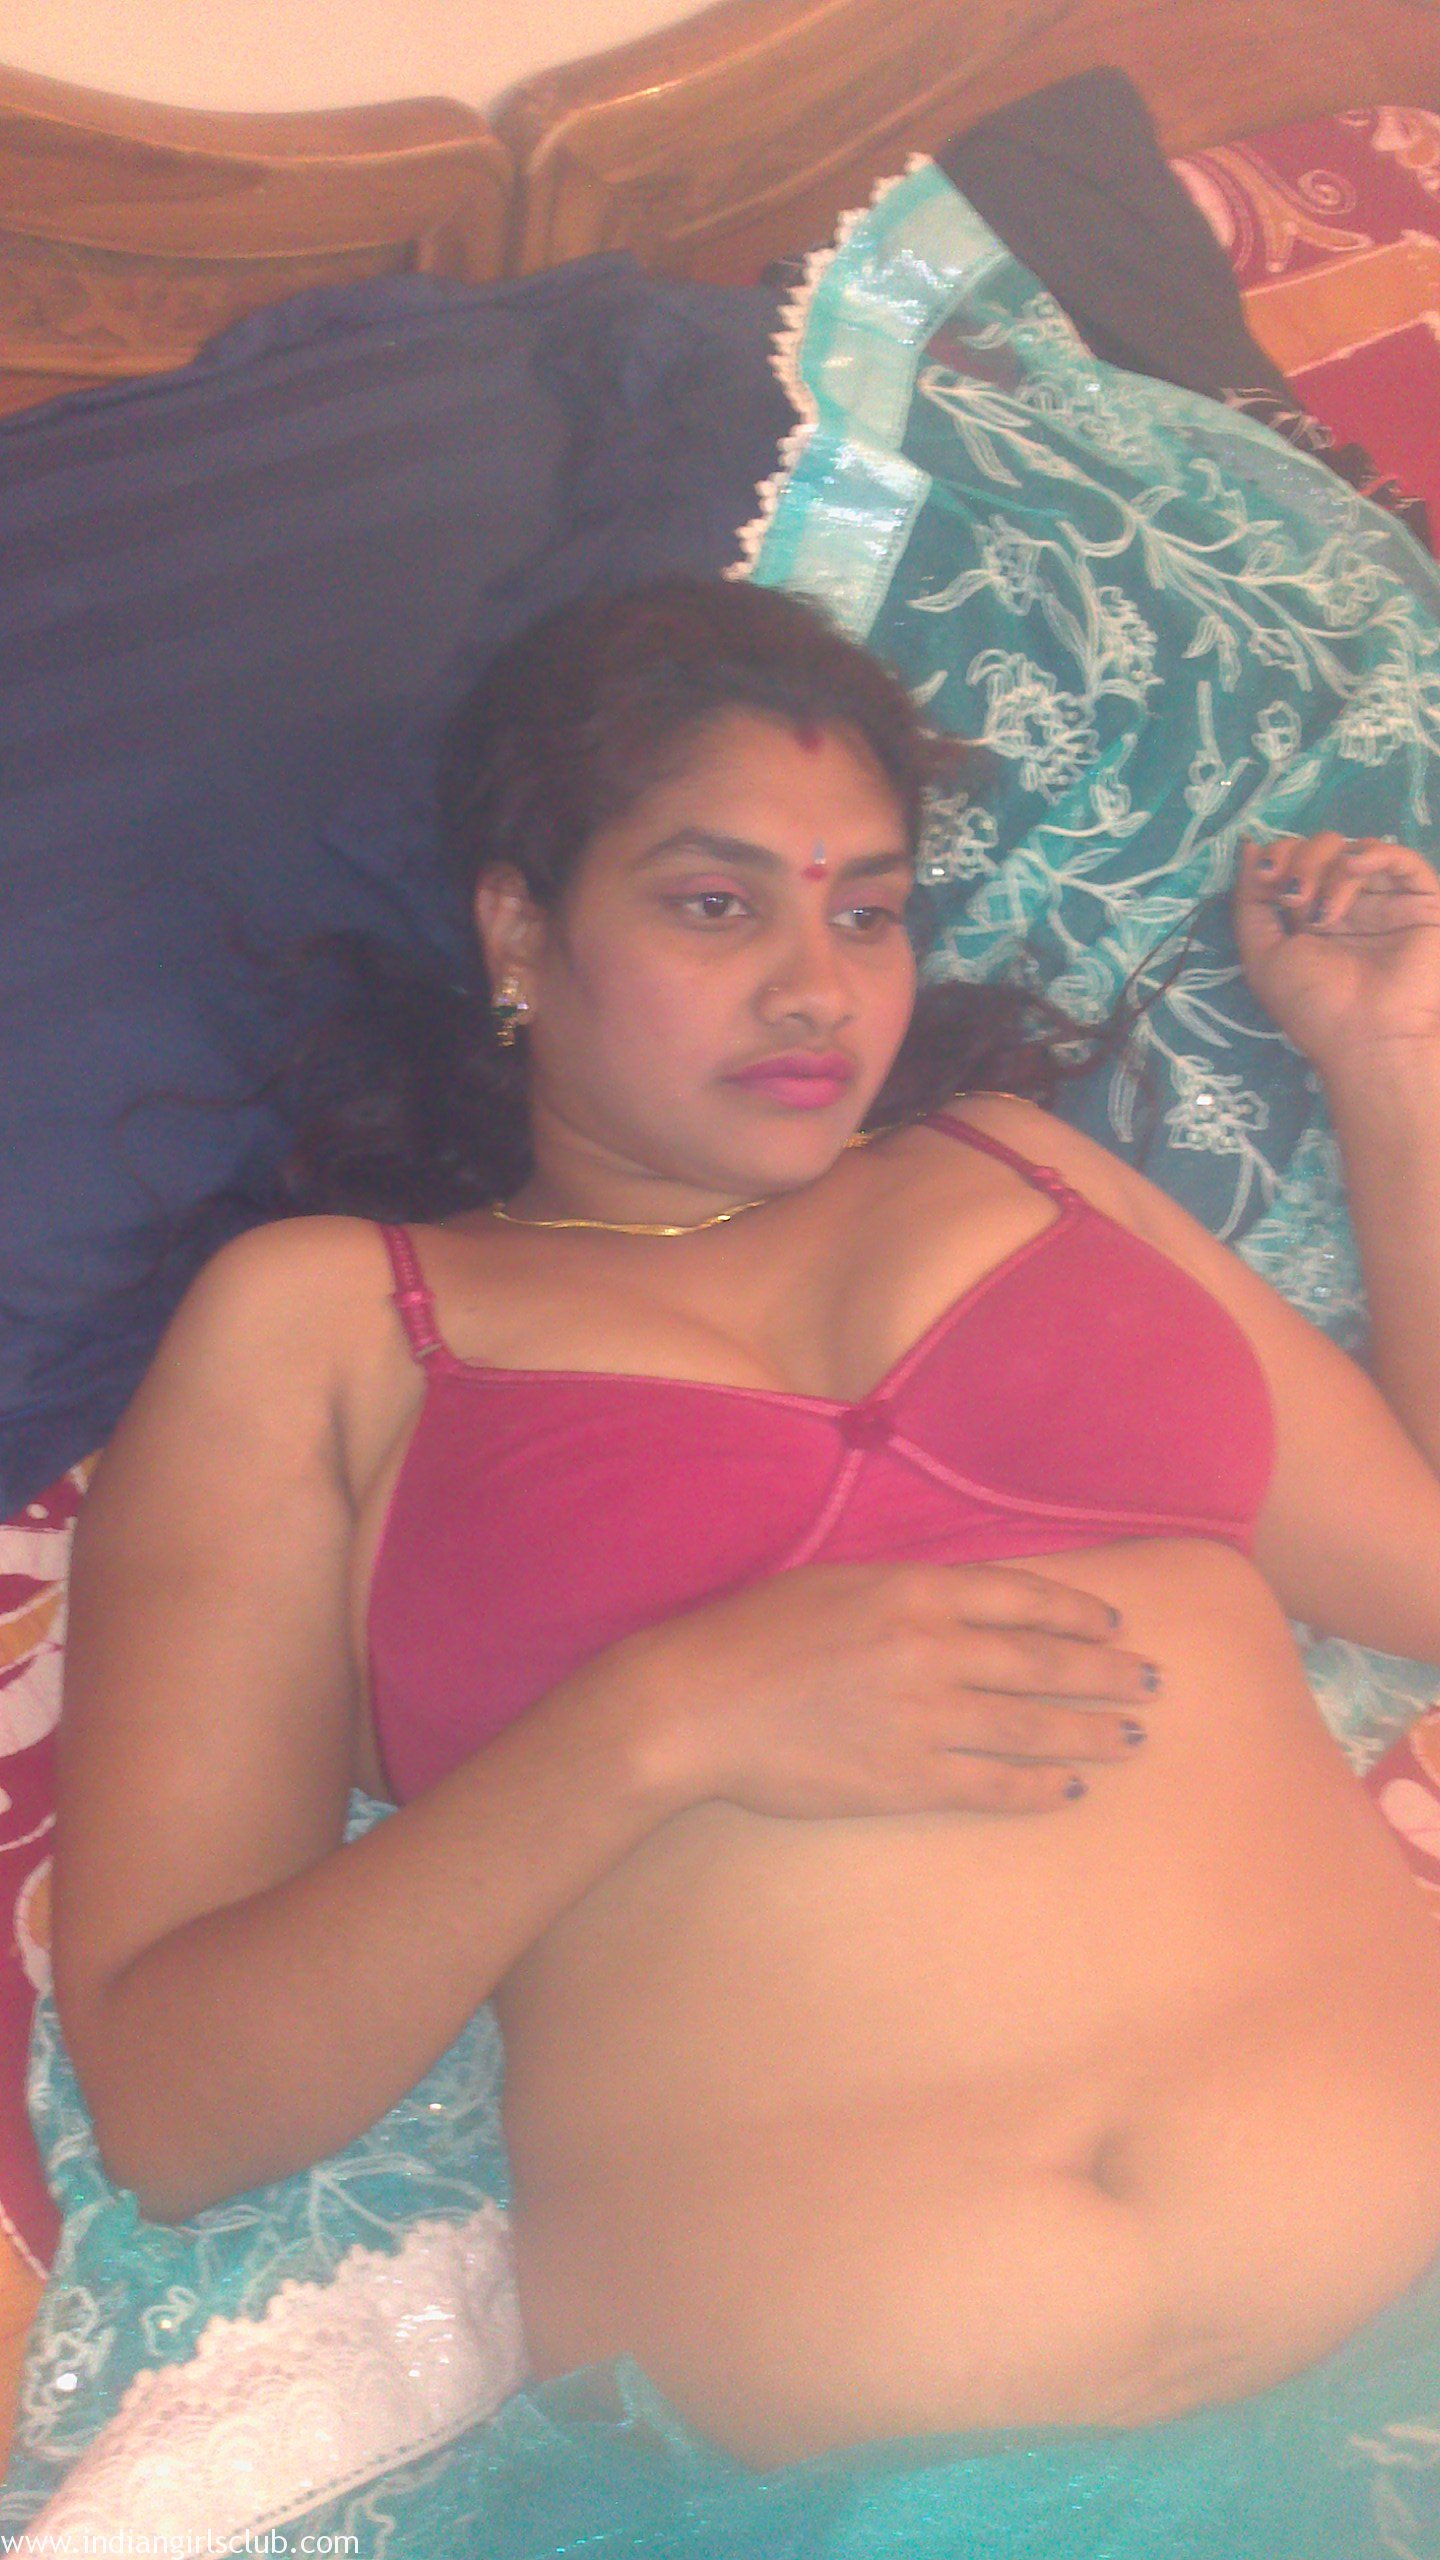 Indian Mallu Big Tits - Real Indian Mallu Bhabhi Big Tits Exposed - Indian Girls Club